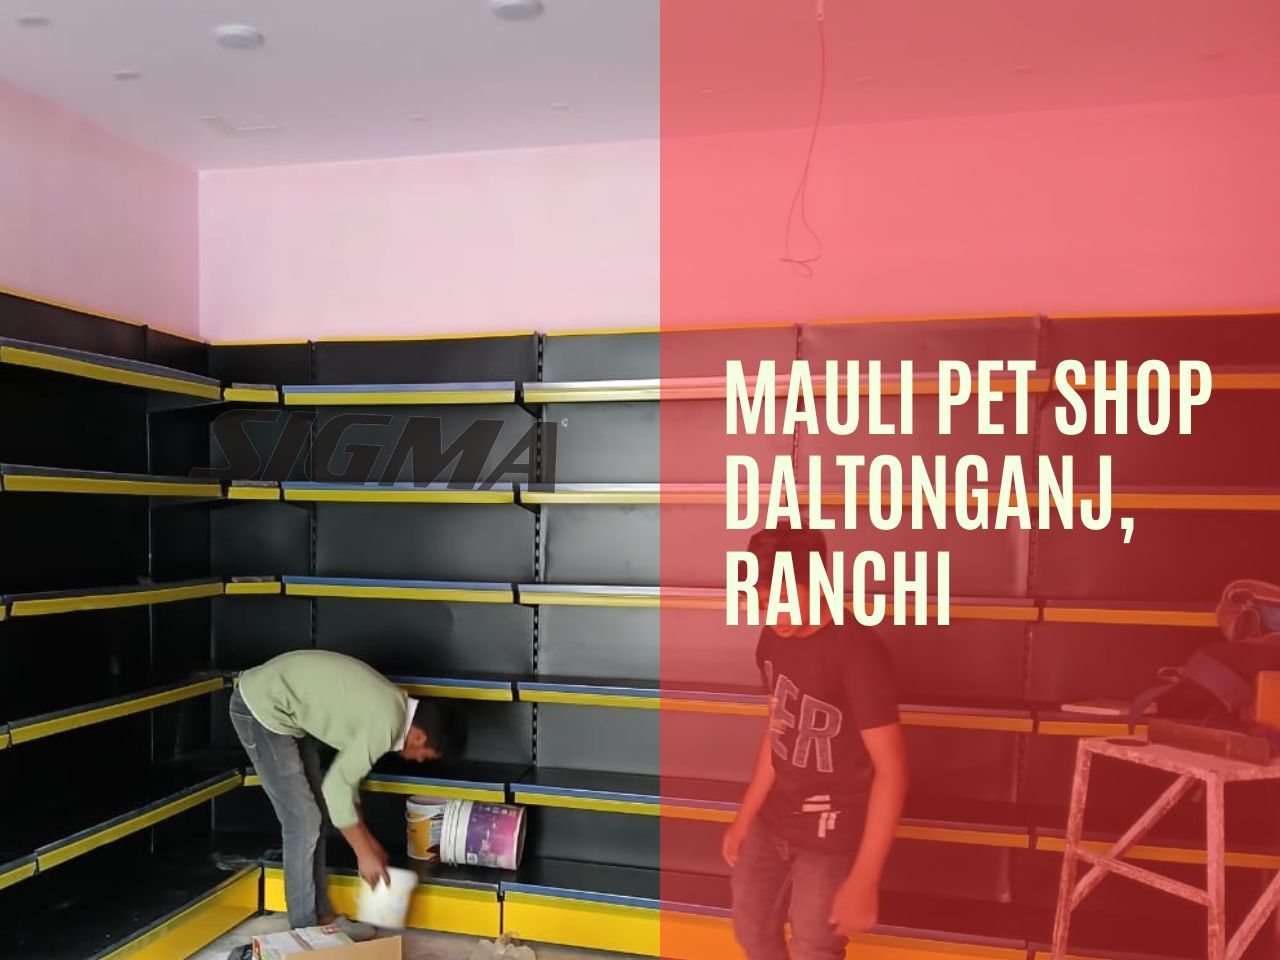 Mauli pet shop Daltonganj, Ranchi.jpg